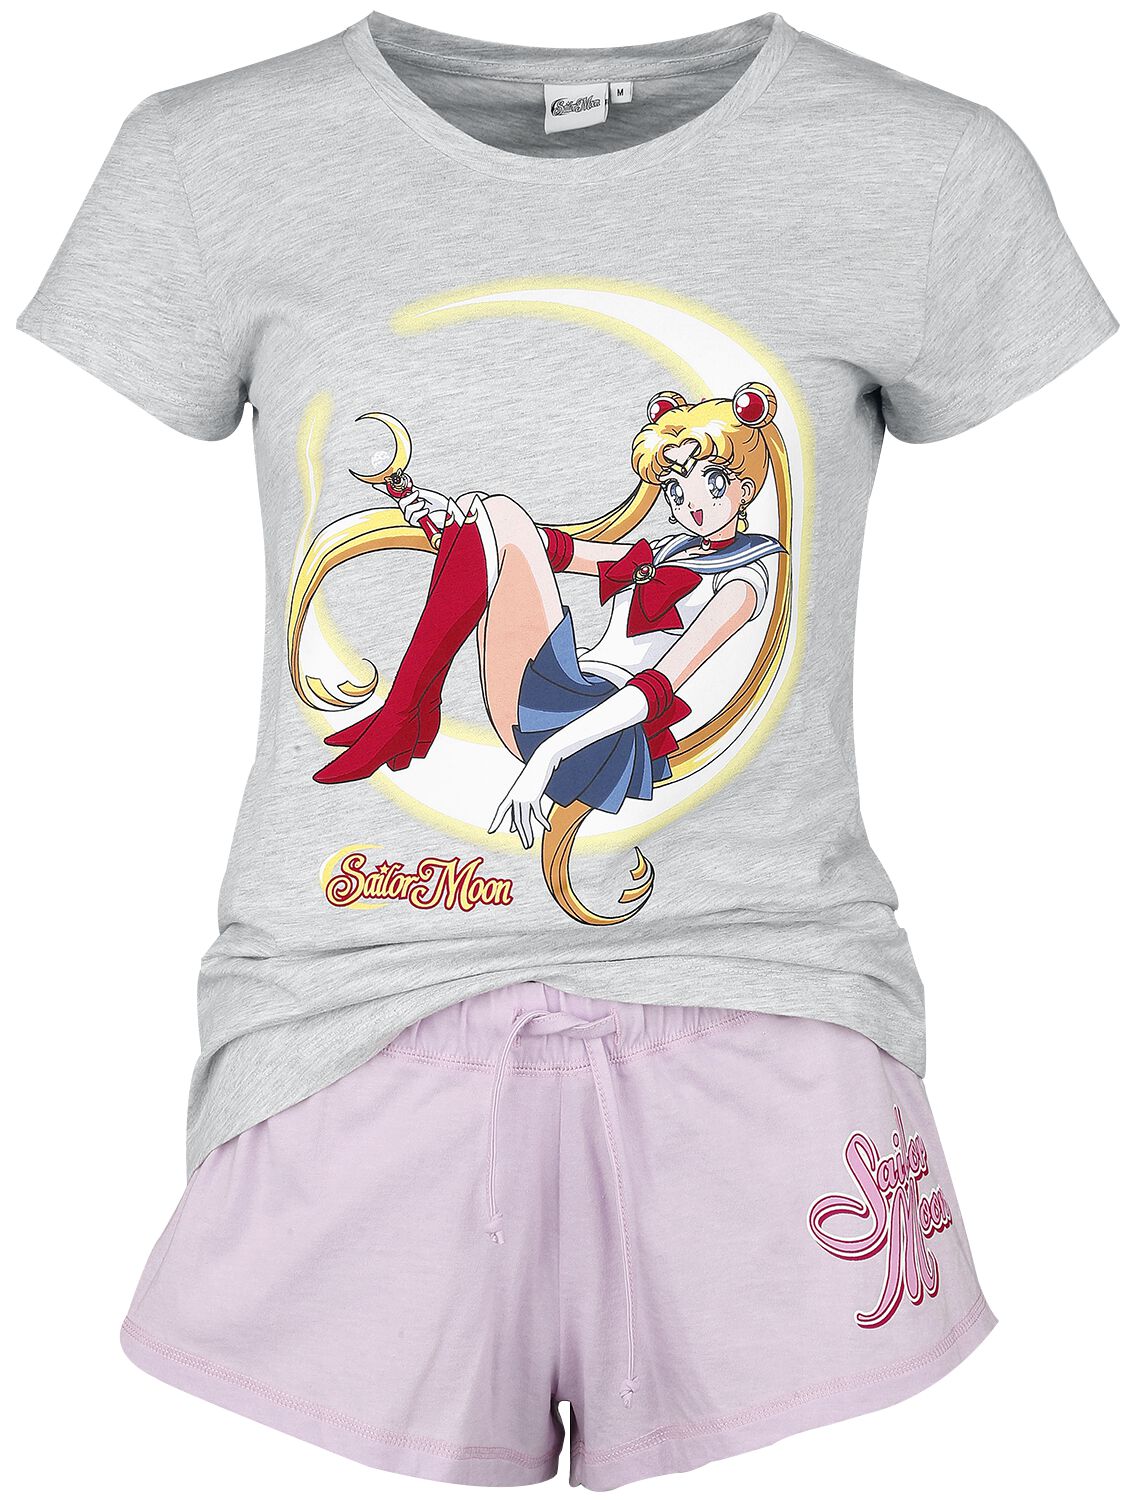 sailor moon - anime schlafanzug - s bis xxl - fÃ¼r damen - grÃ¶ÃŸe l - - emp exklusives merchandise! multicolor donna